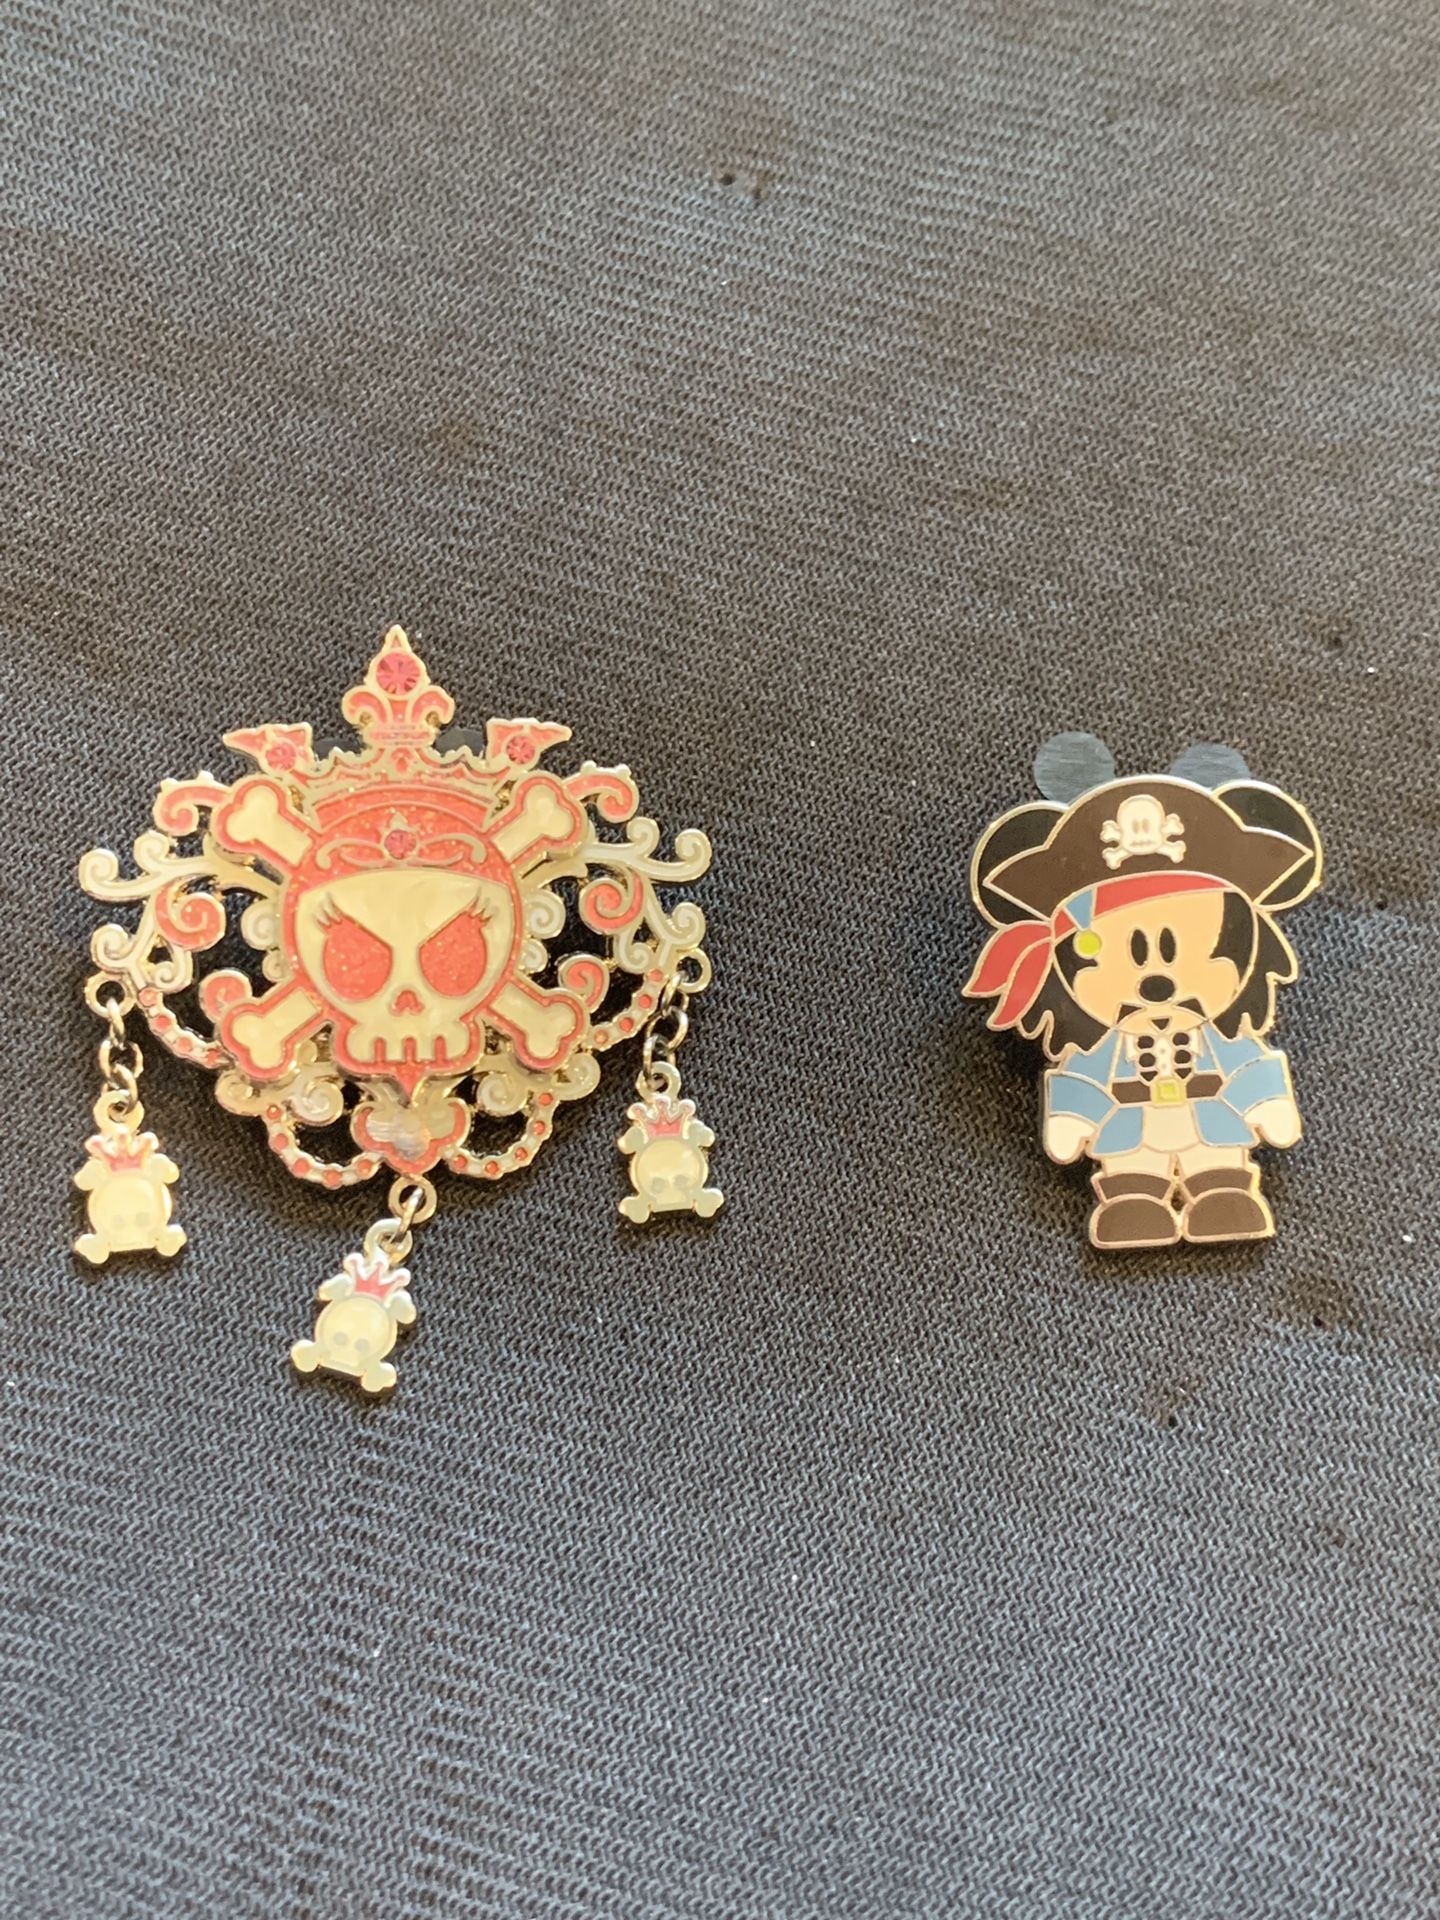 Disney Pirates of the Caribbean enamel pins